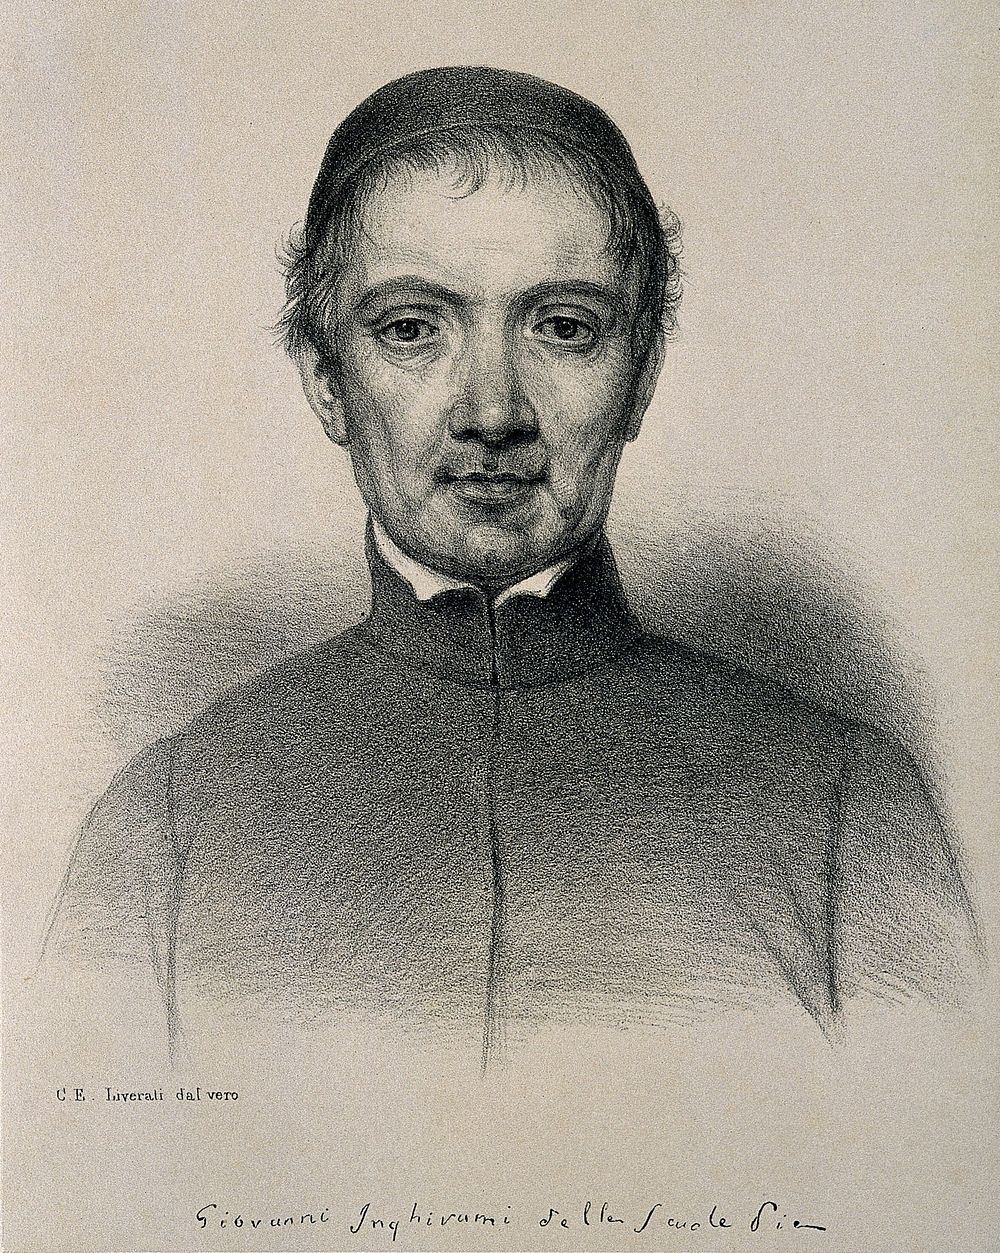 Giovanni Inghirami. Lithograph by C. E. Liverati, 1841, after himself.